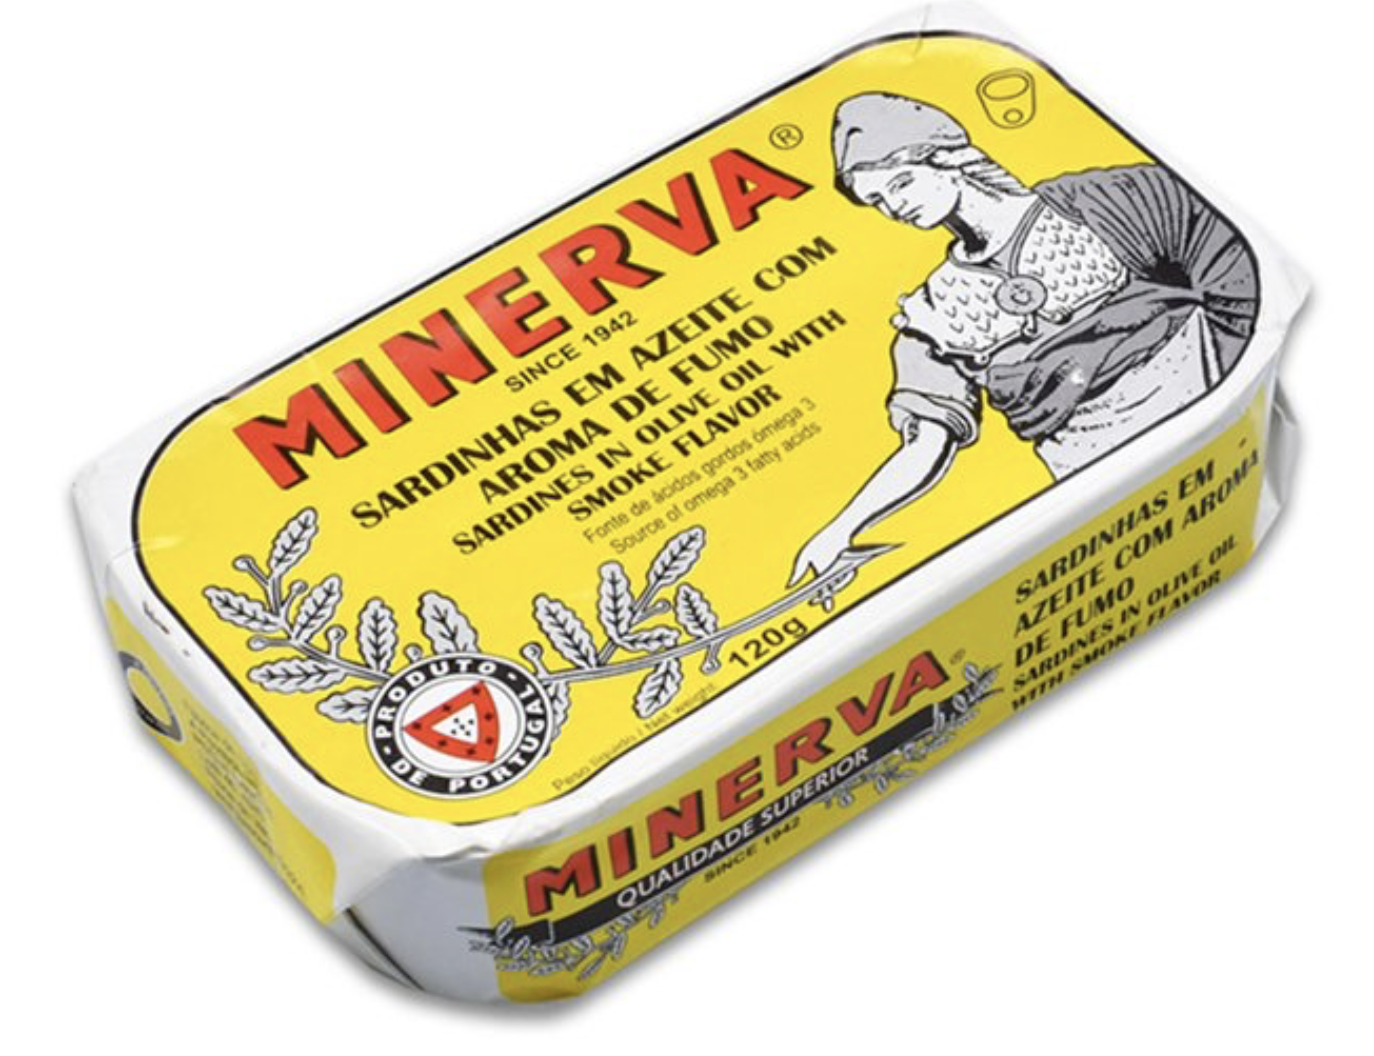 Minerva Smoked Sardines in Olive Oil